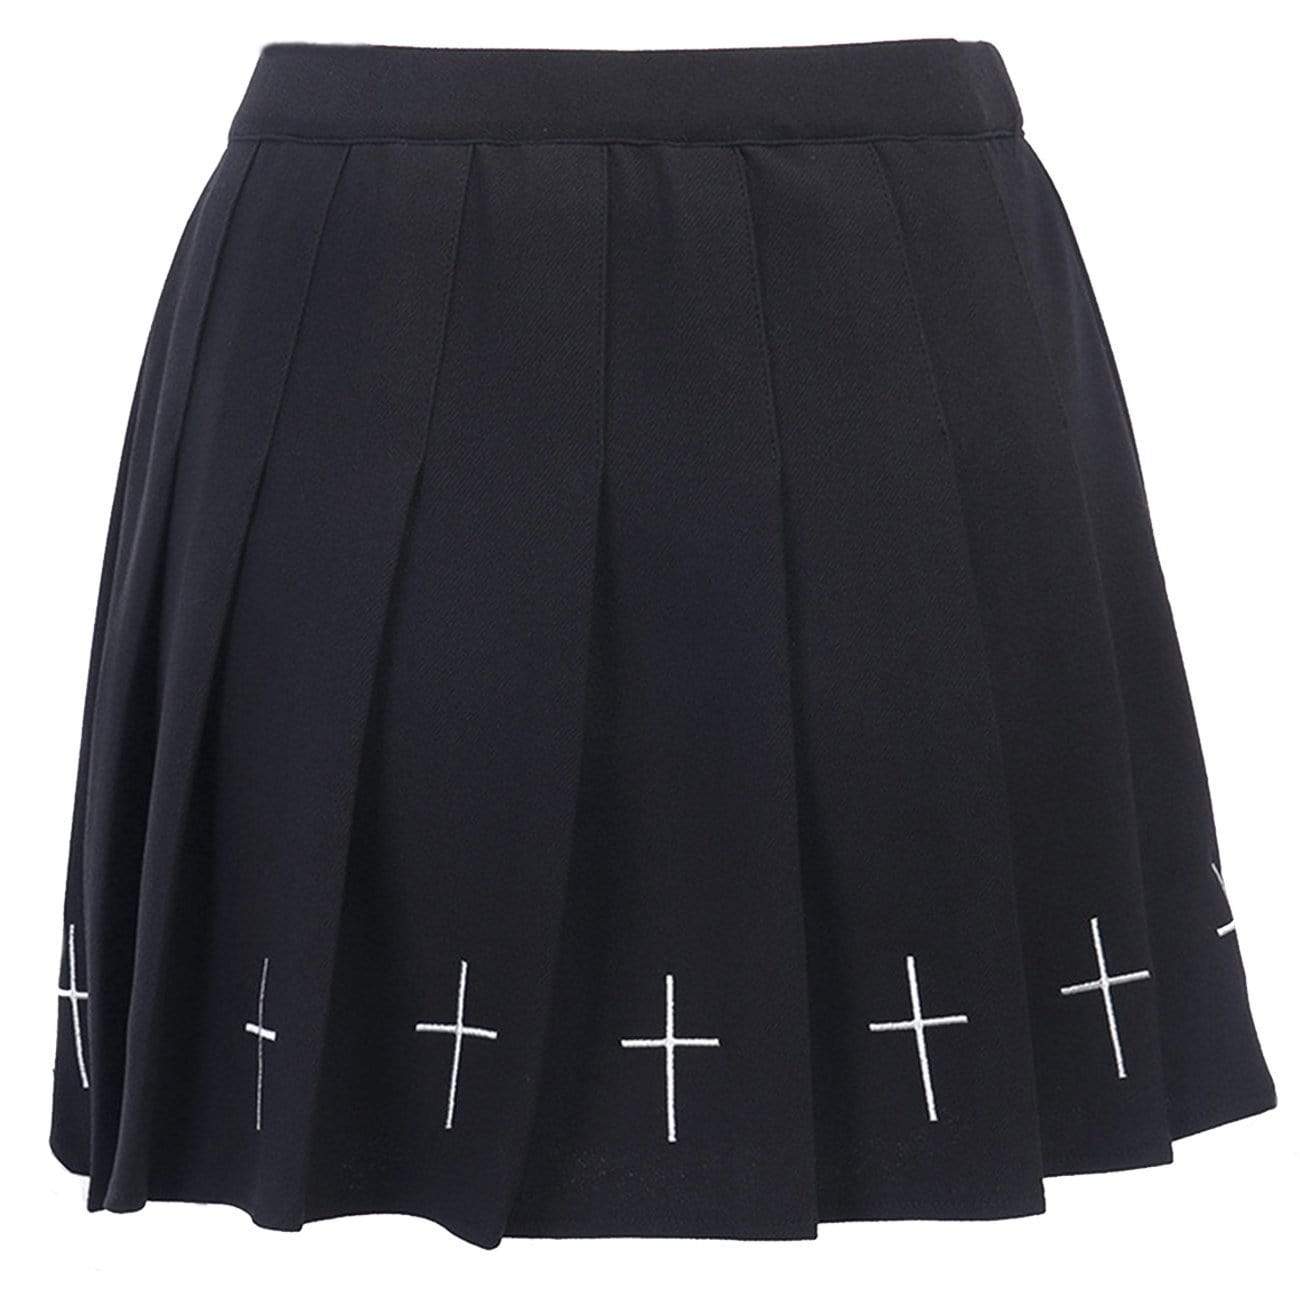 TO Dark Cross Print High-Waist Pleated Skirt